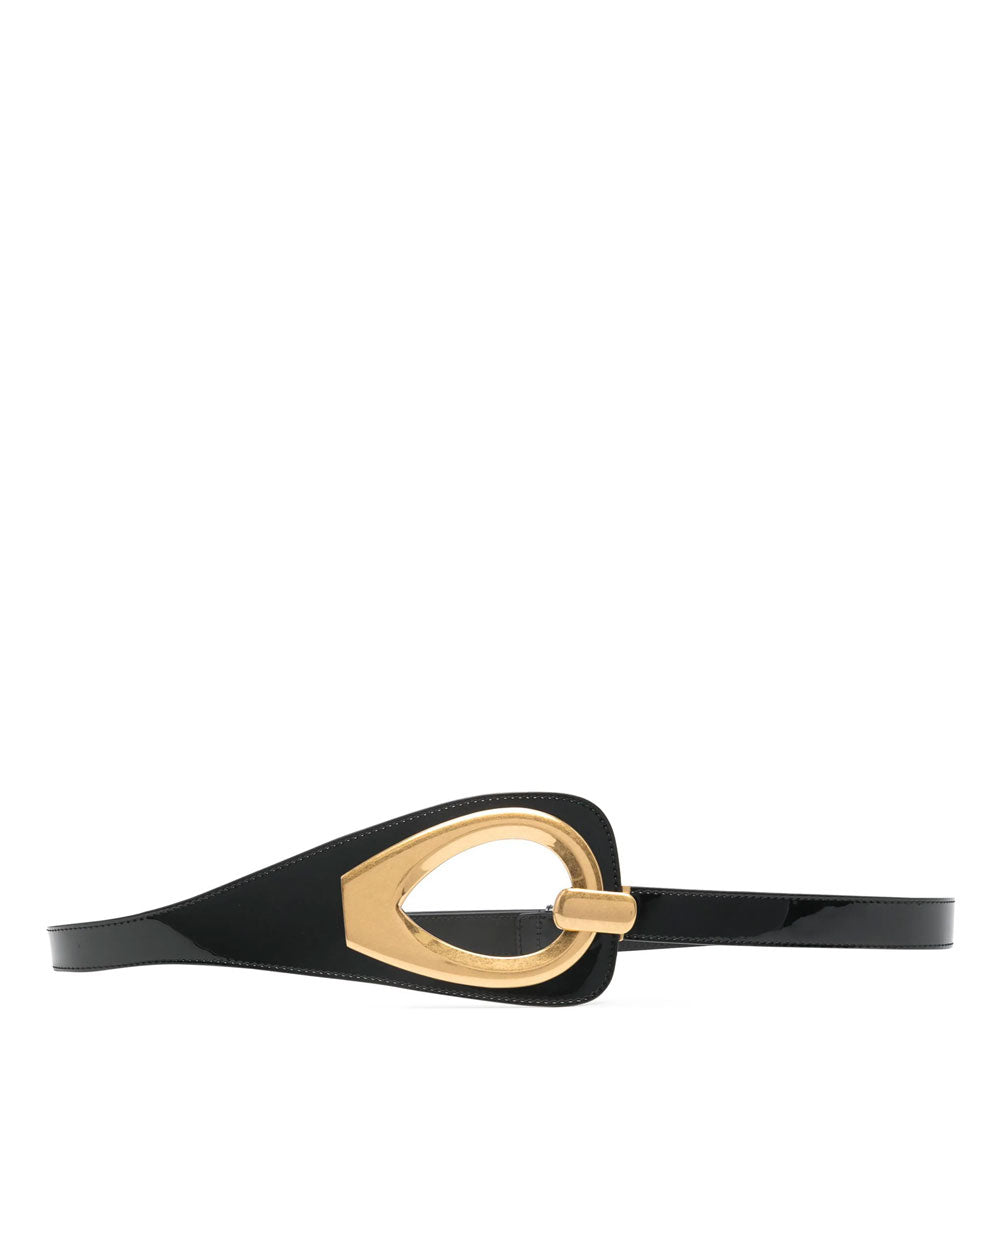 Hera Patent Leather Belt in Black